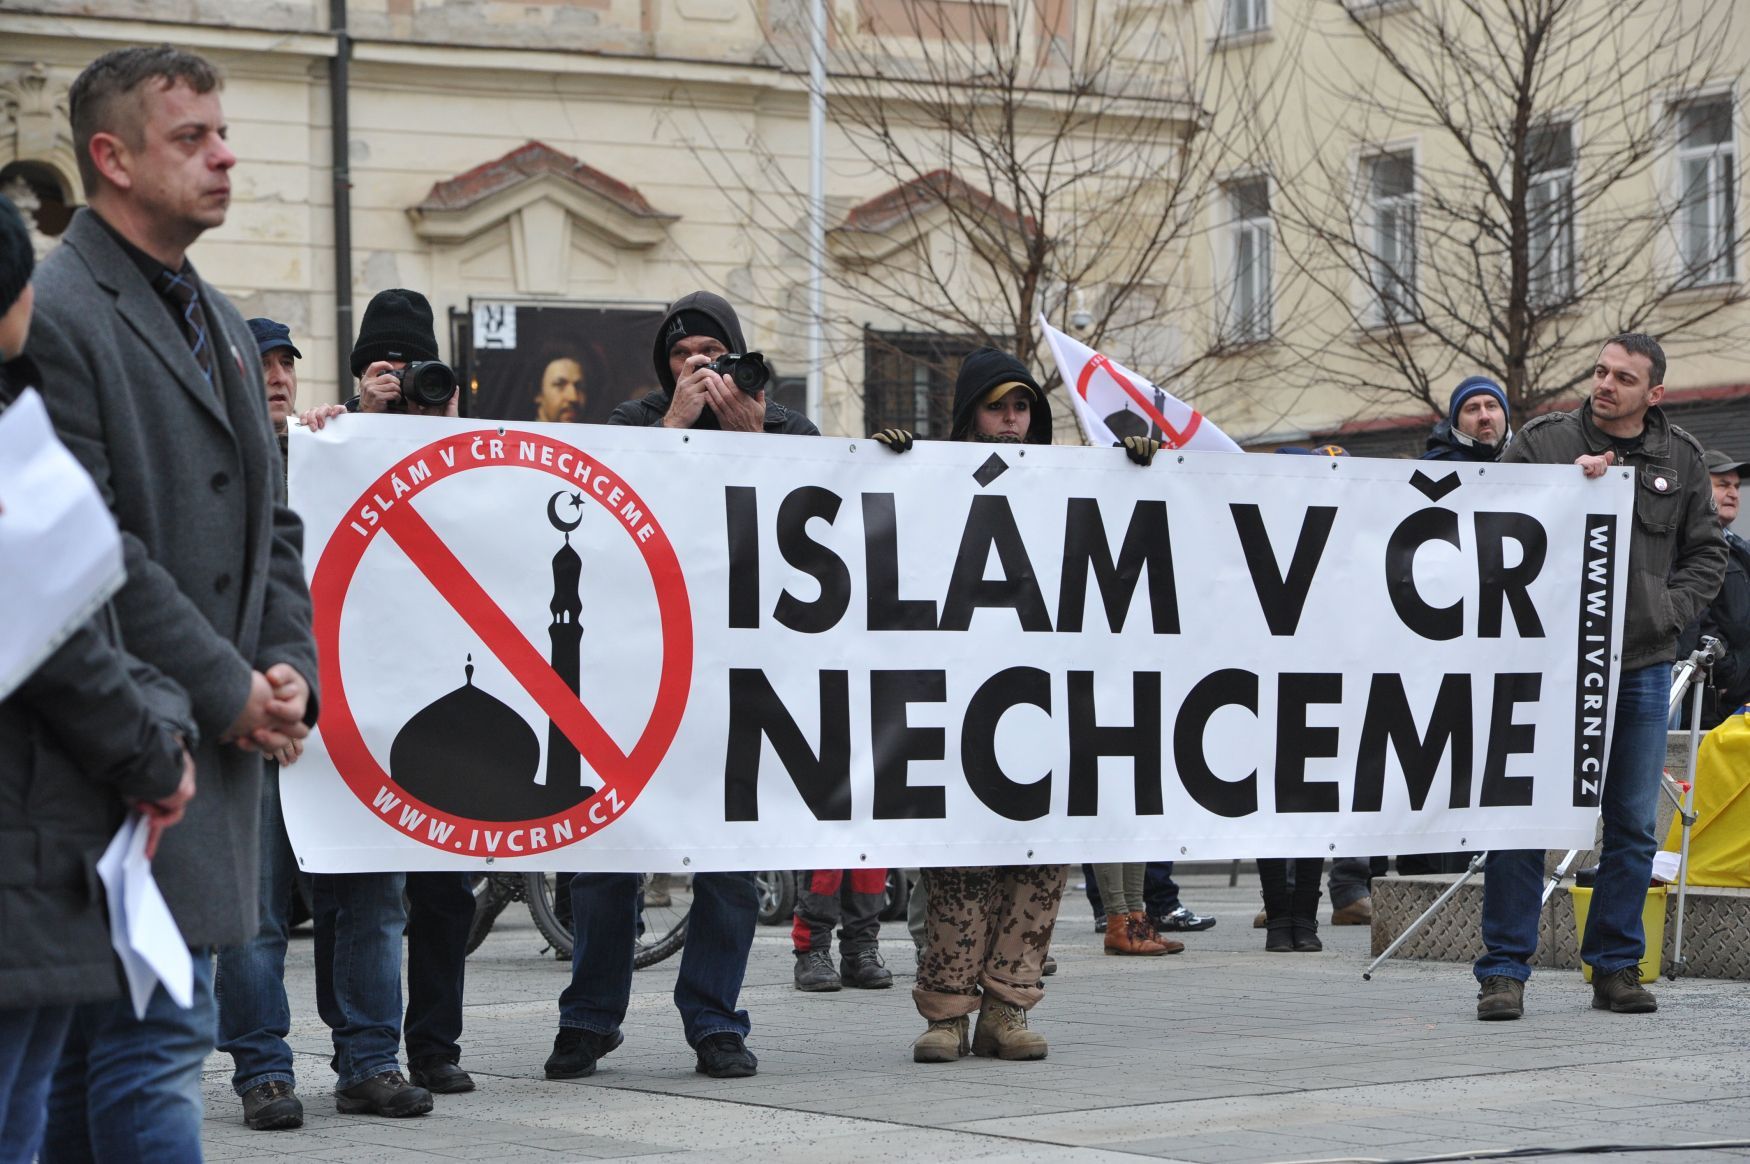 Islám v ČR nechceme